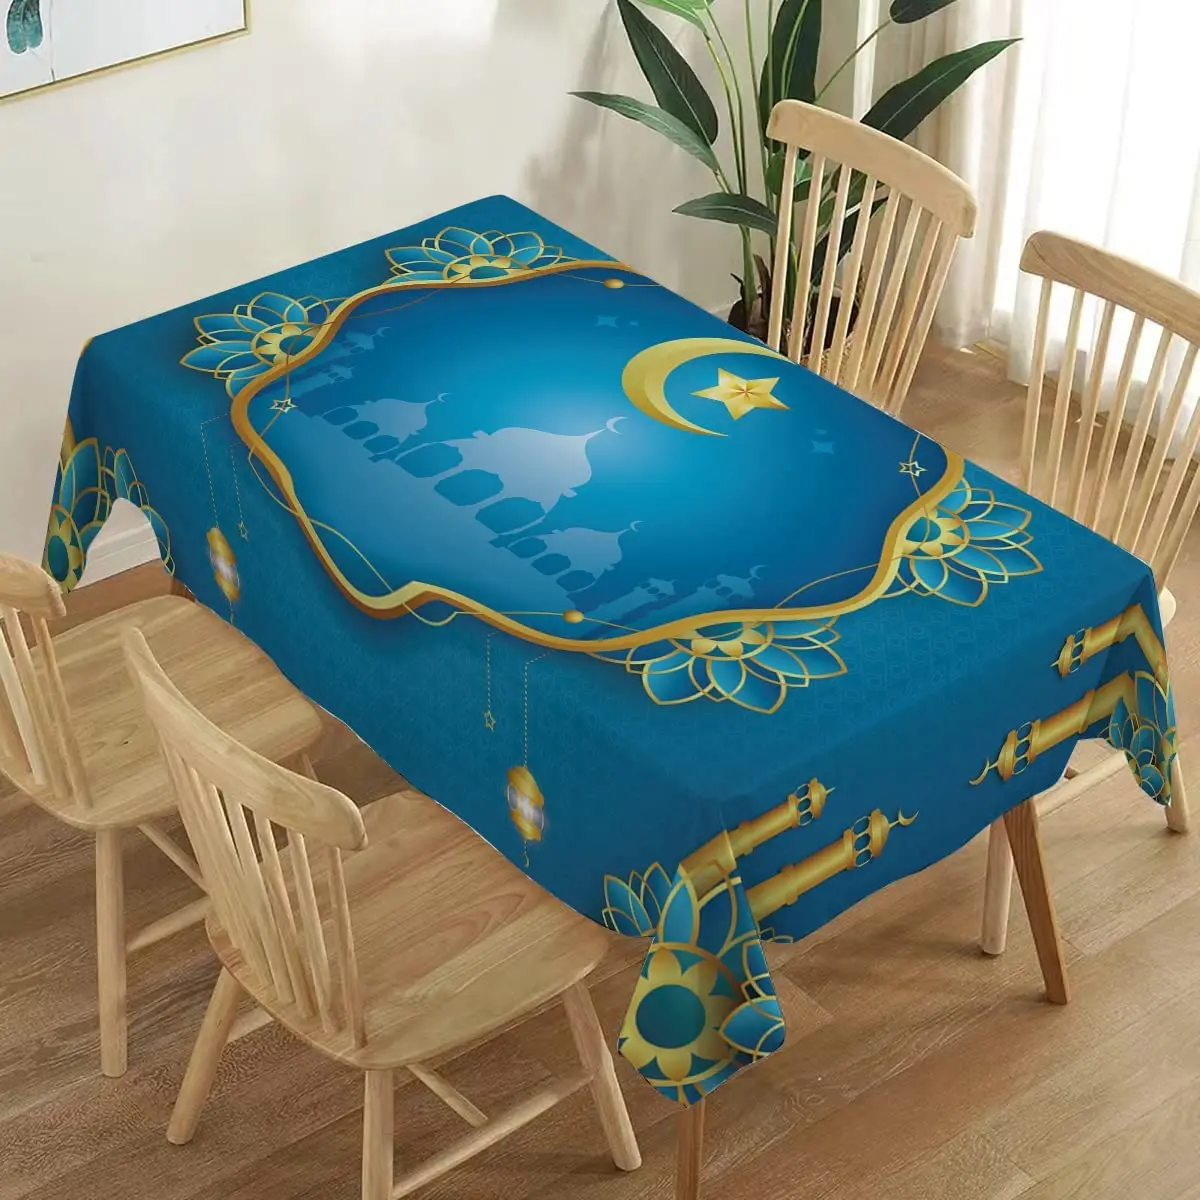 

Eid Mubarak Waterproof Tablecloth Islamic Muslim Eid Al-fitr Party Decoration Mosque Star Moon Home Kitchen Dining Table Decor